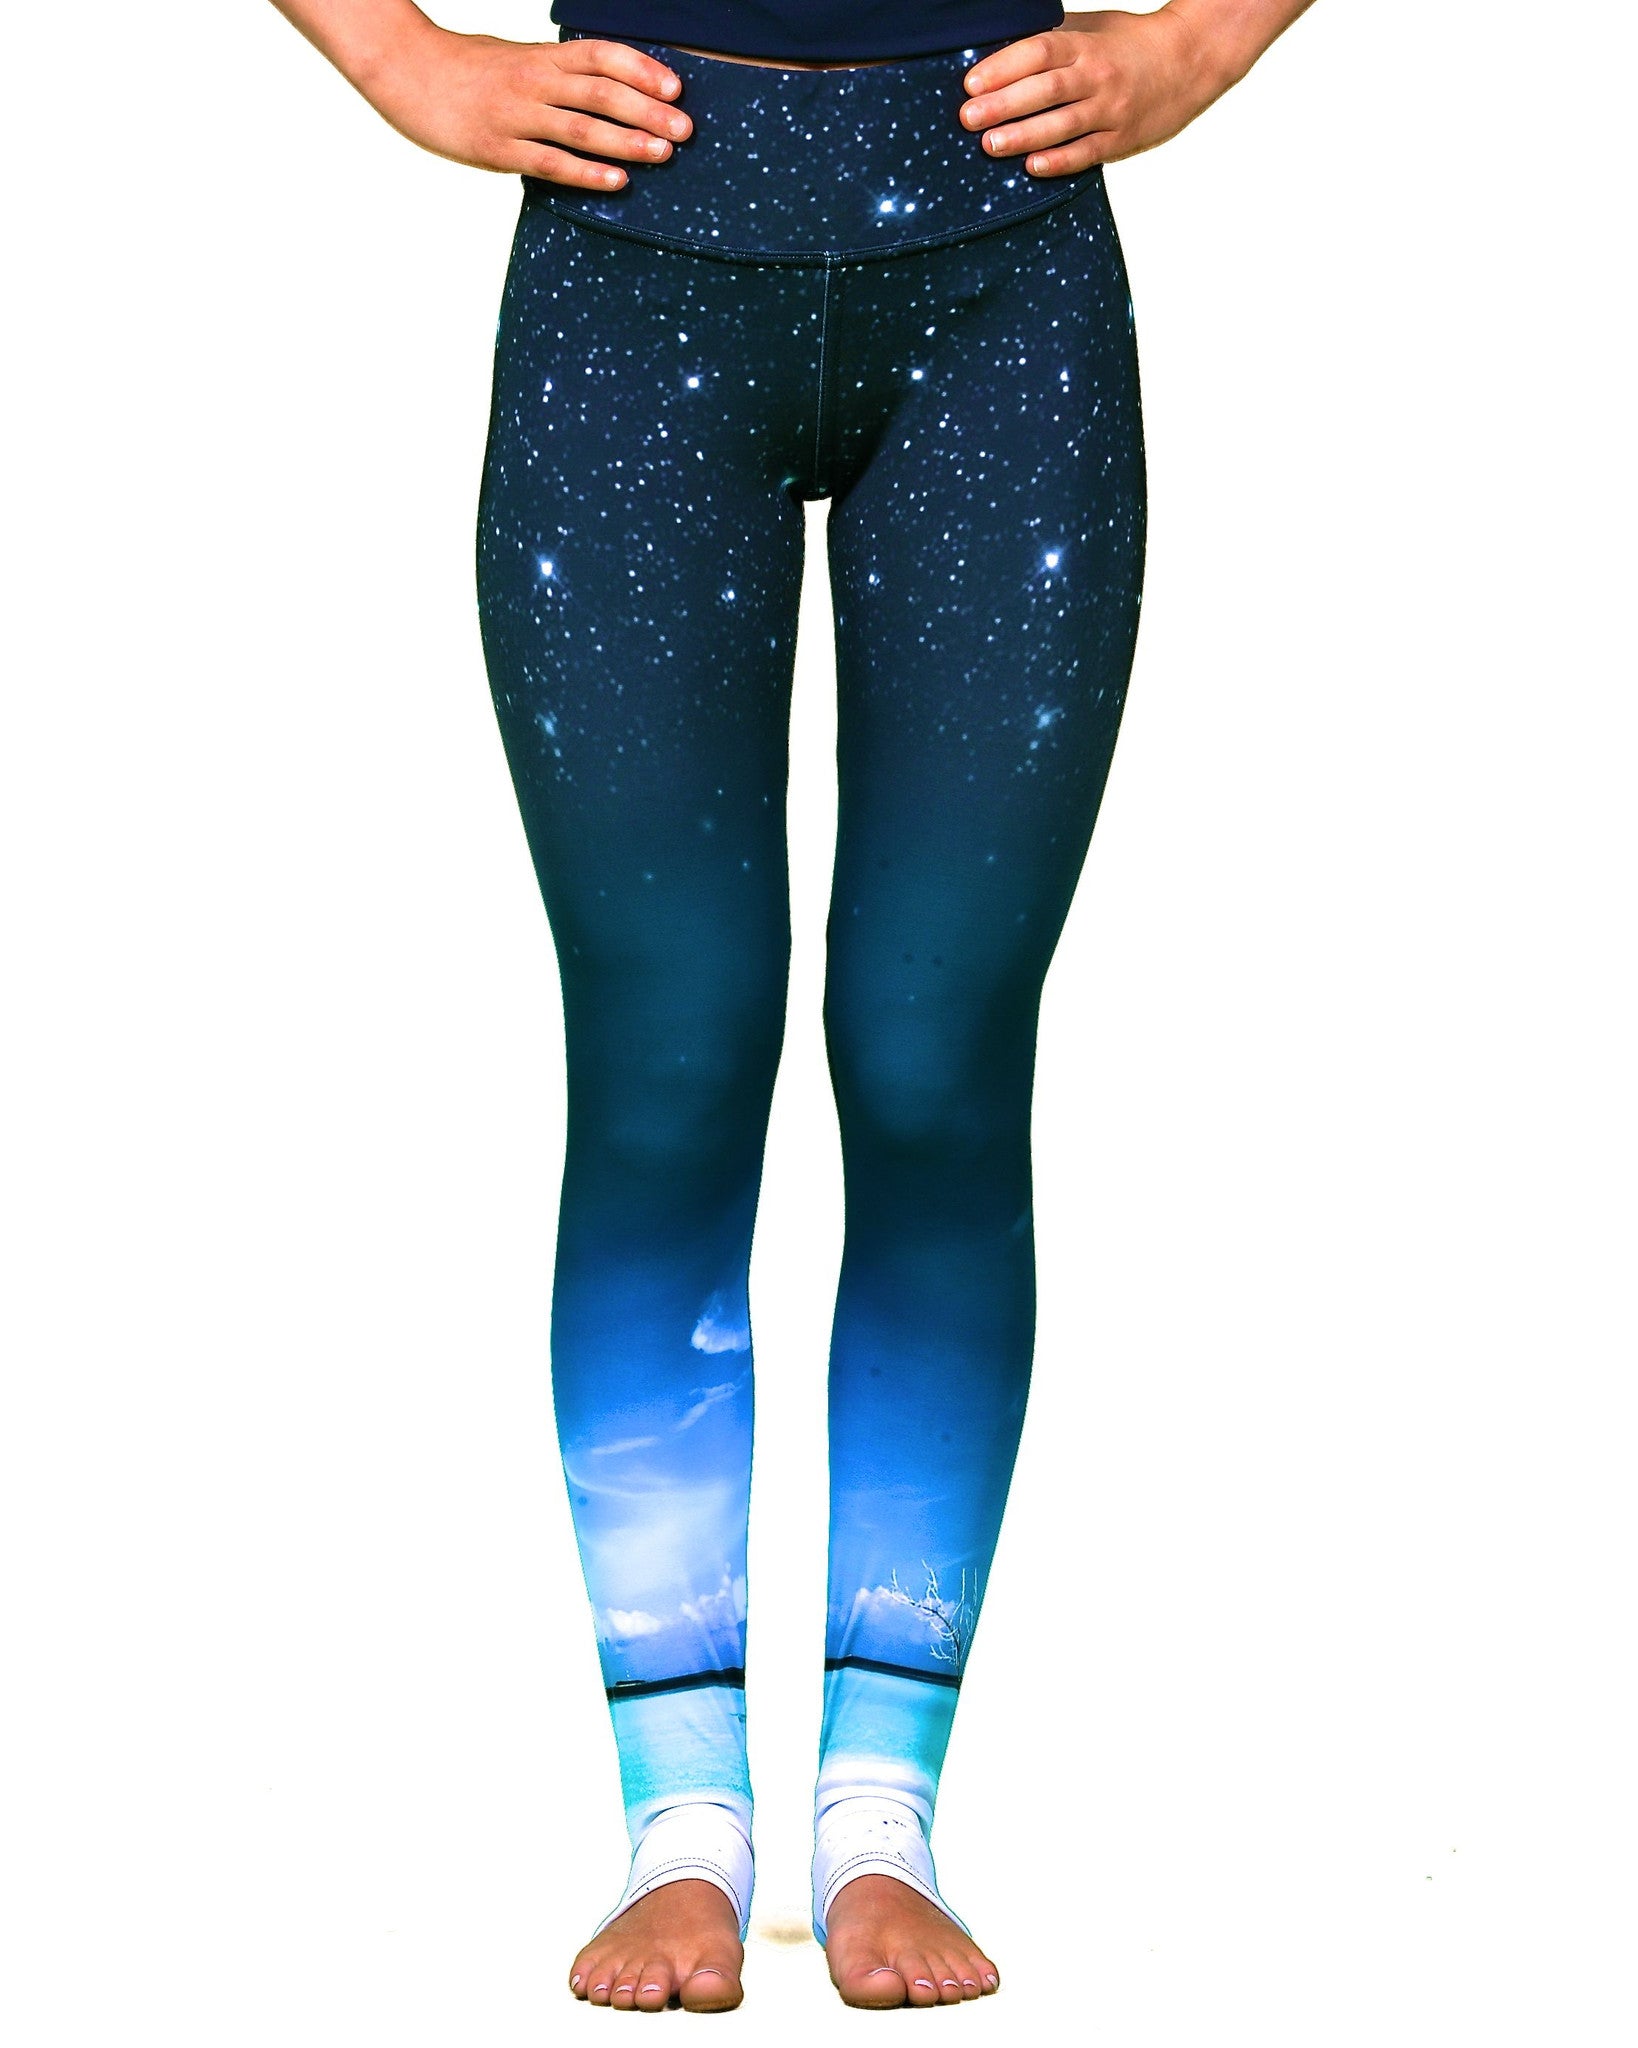 Blue Reflection High Waist leggings full length. – Martin West Designs